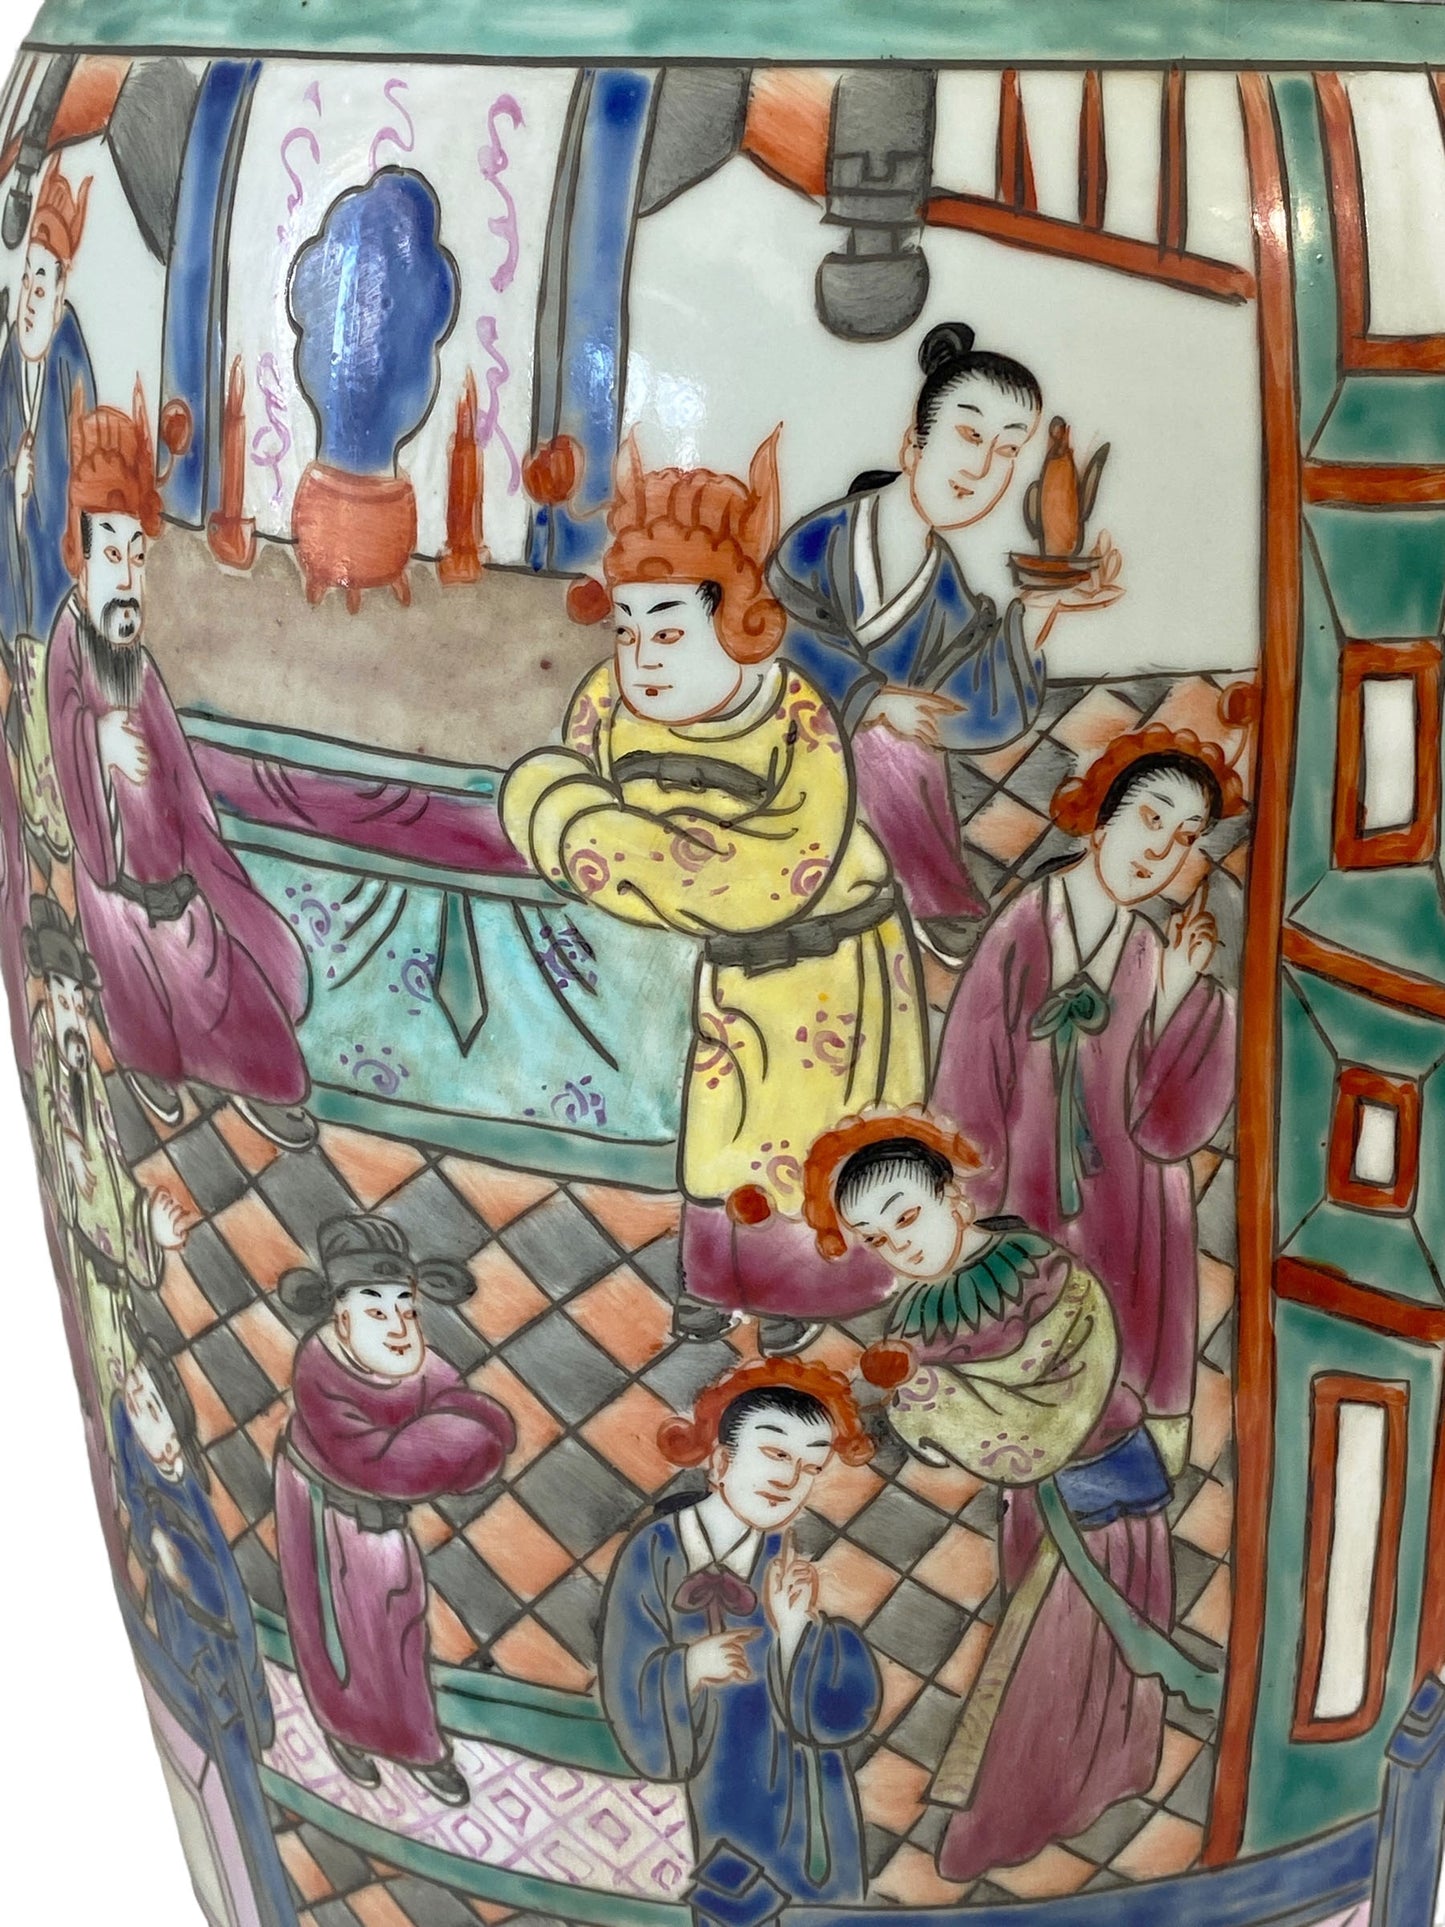 # 262 Superb Chinoiserie Famille Rose Enamel Vase W/Figures 24" H